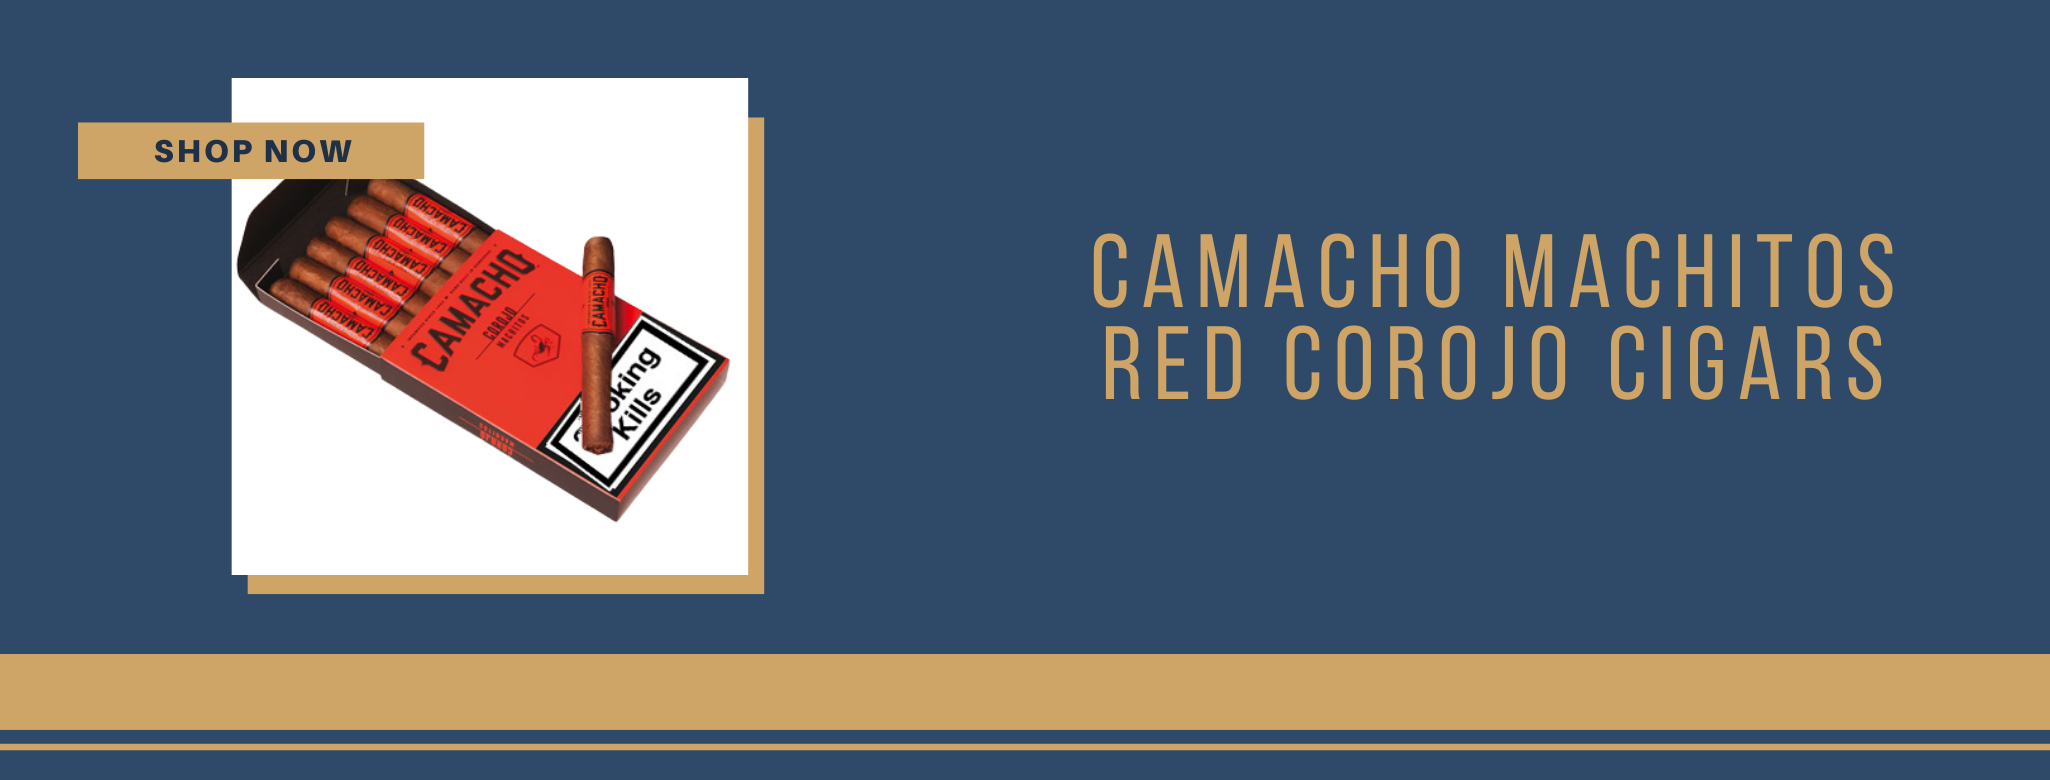 Camacho Machito Red Corojo cigars online